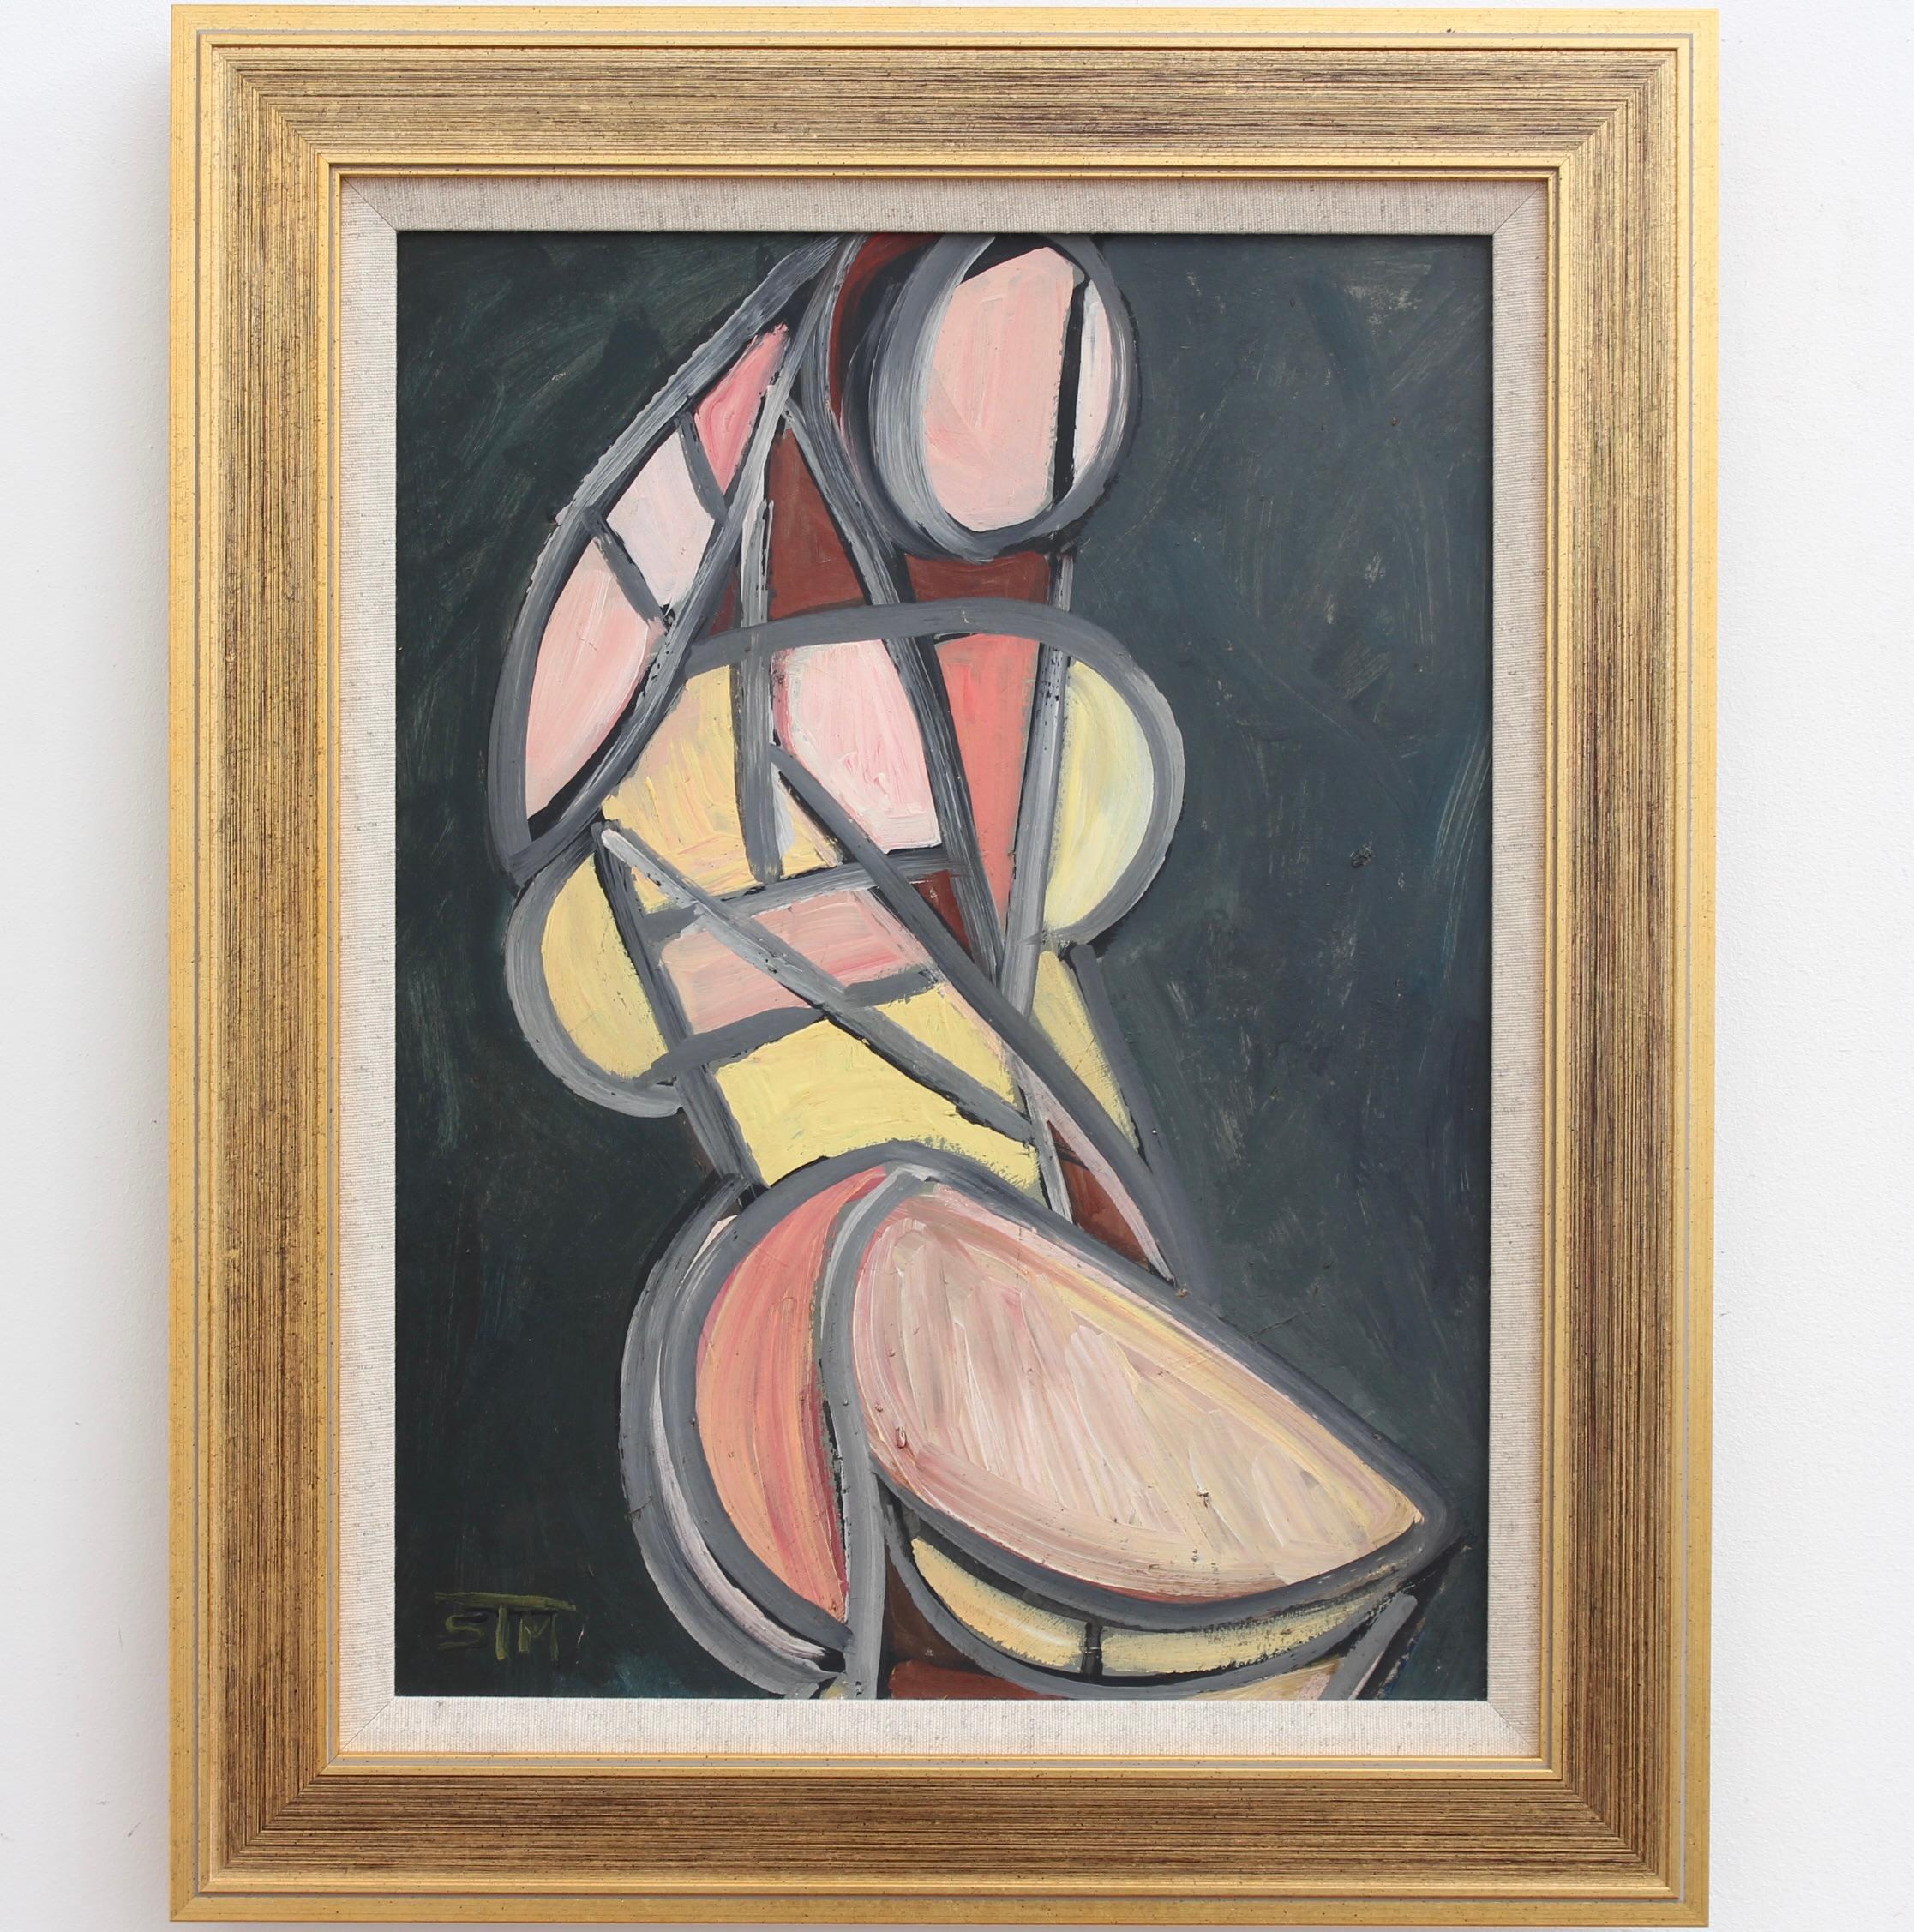 STM Portrait Painting - Abstract Prism: Radiant Cubist Figure